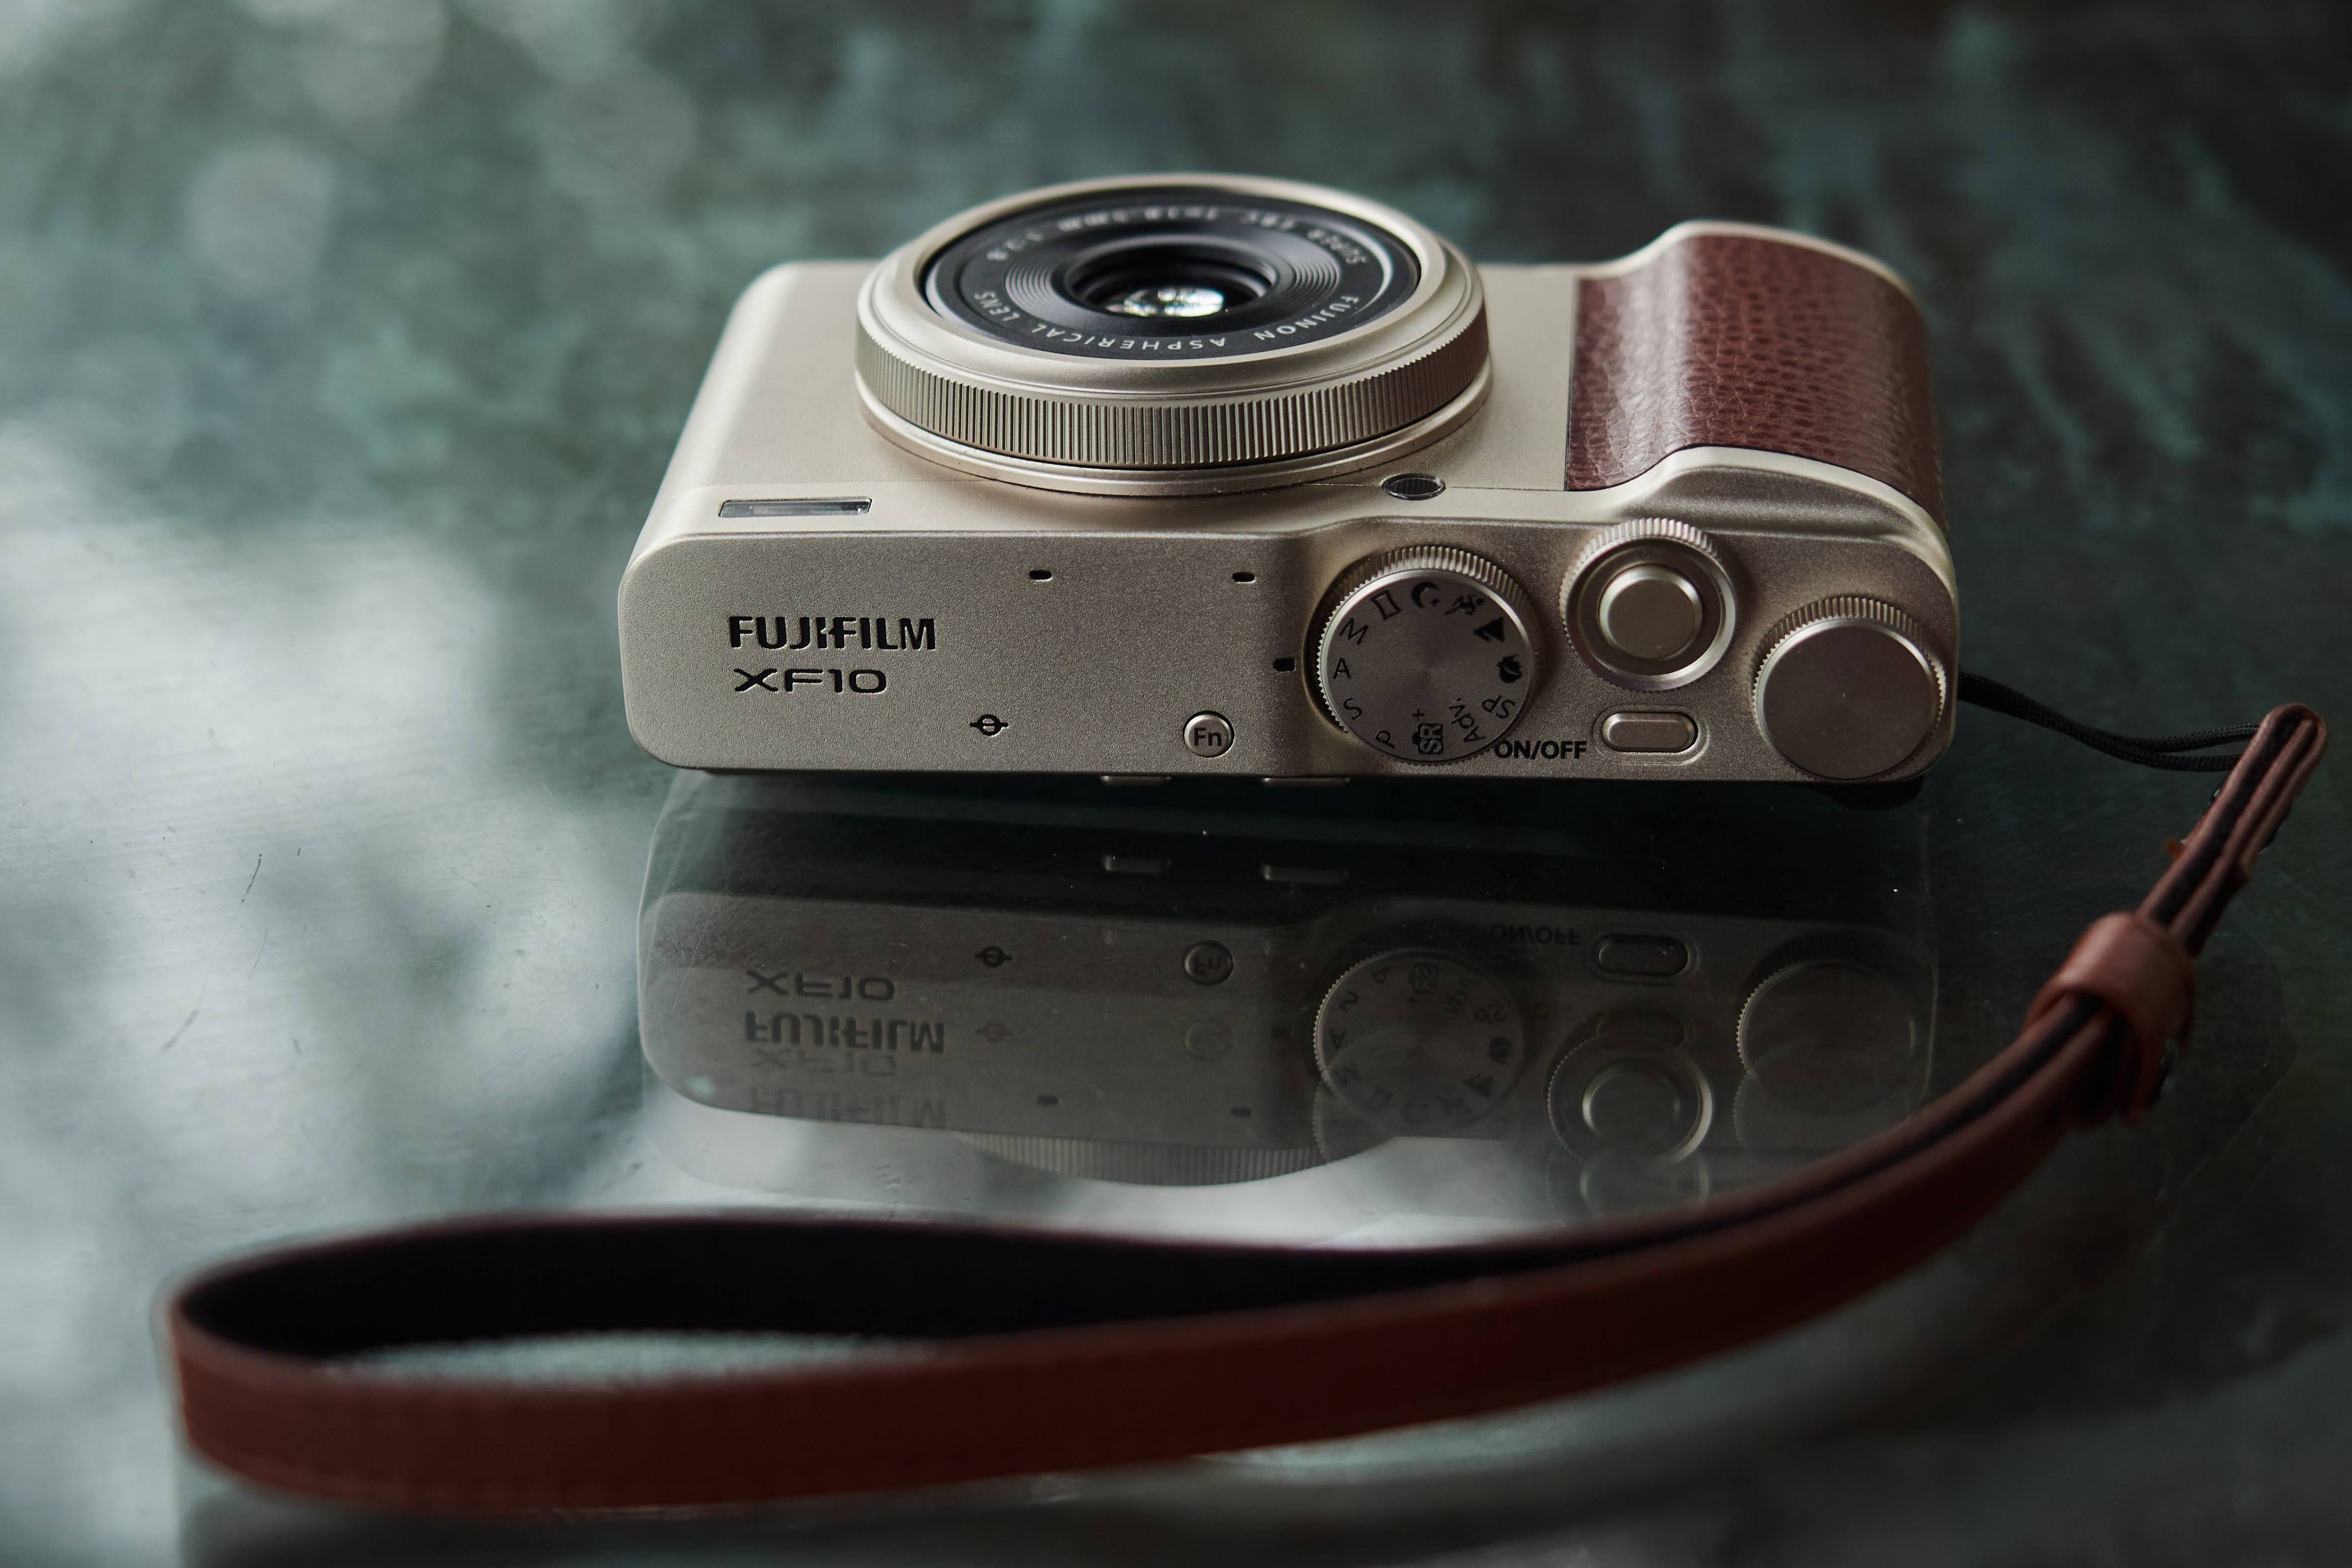 Fujifilm XF10: Pocket-Sized Compact with APS-C Sensor